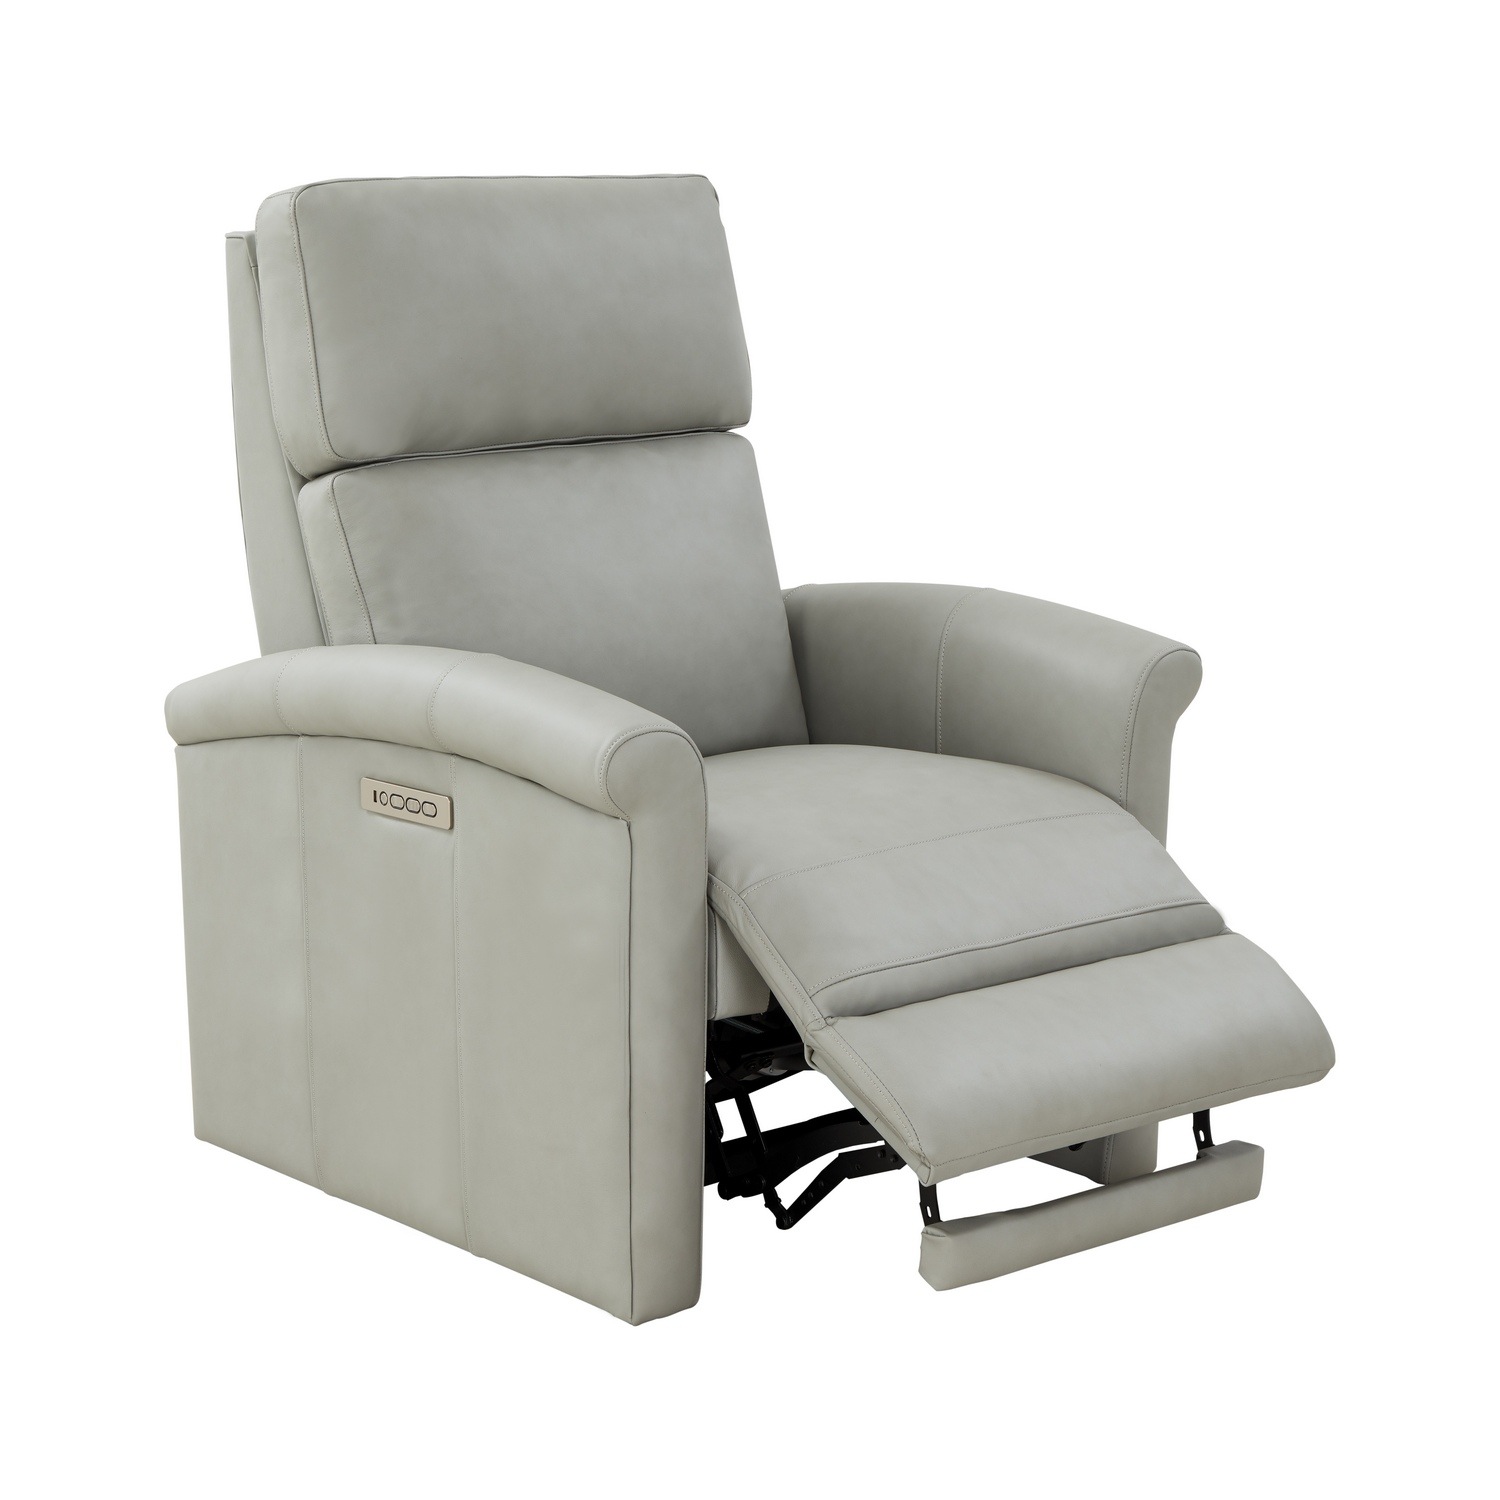 Barcalounger Jaxon Zero Gravity Power Recliner Chair with Power Head Rest and Lumbar - Corbett Chromium/All Leather